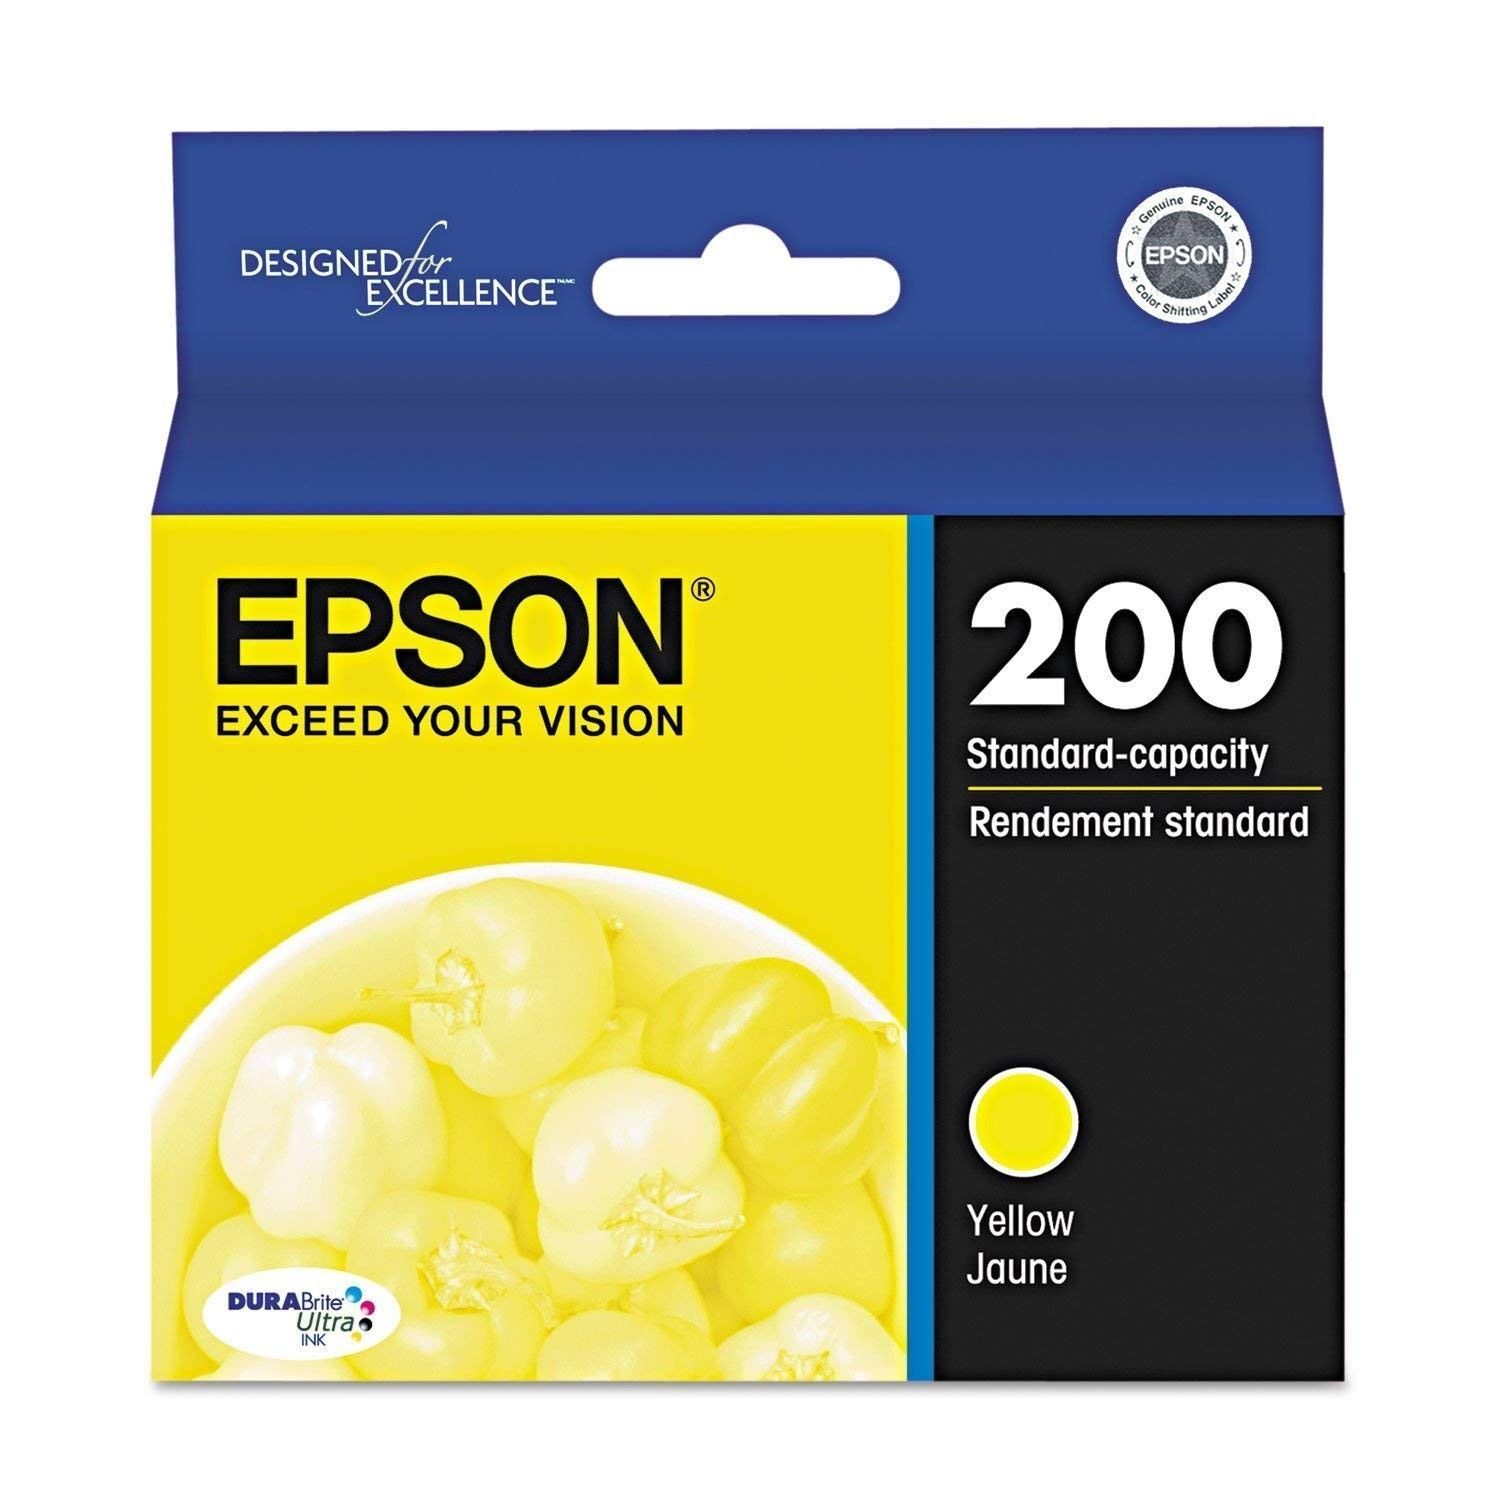 NEW Epson 200 Yellow Ink Cartridge T200420 Genuine EXP 06/2023